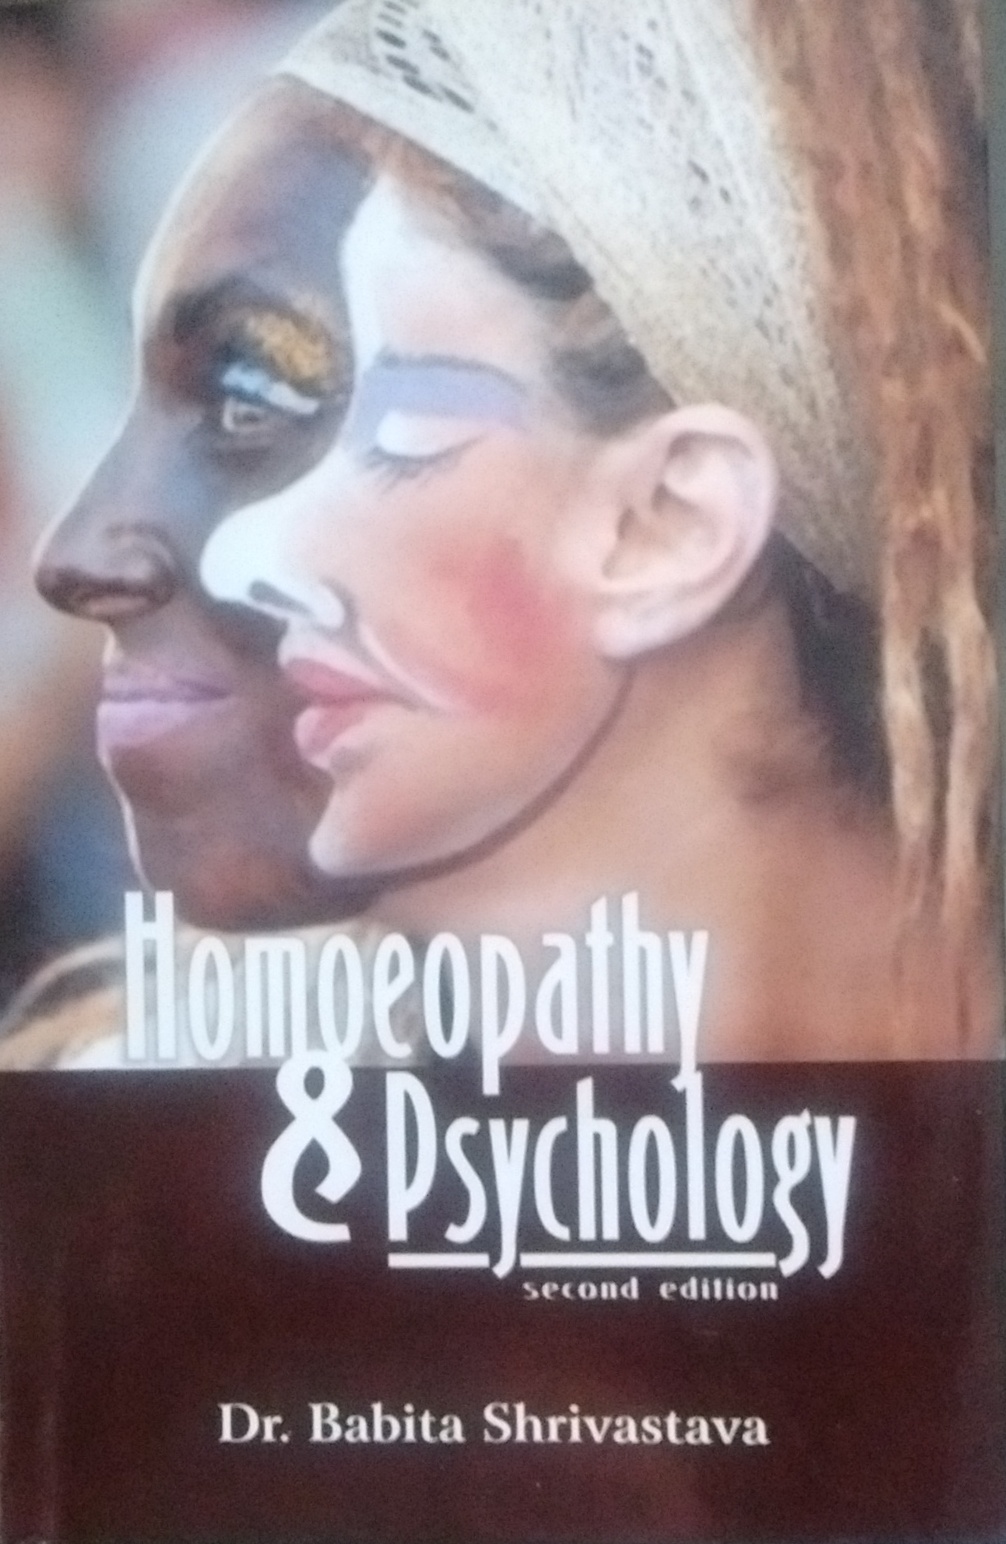 Homoeopathy & Psychology